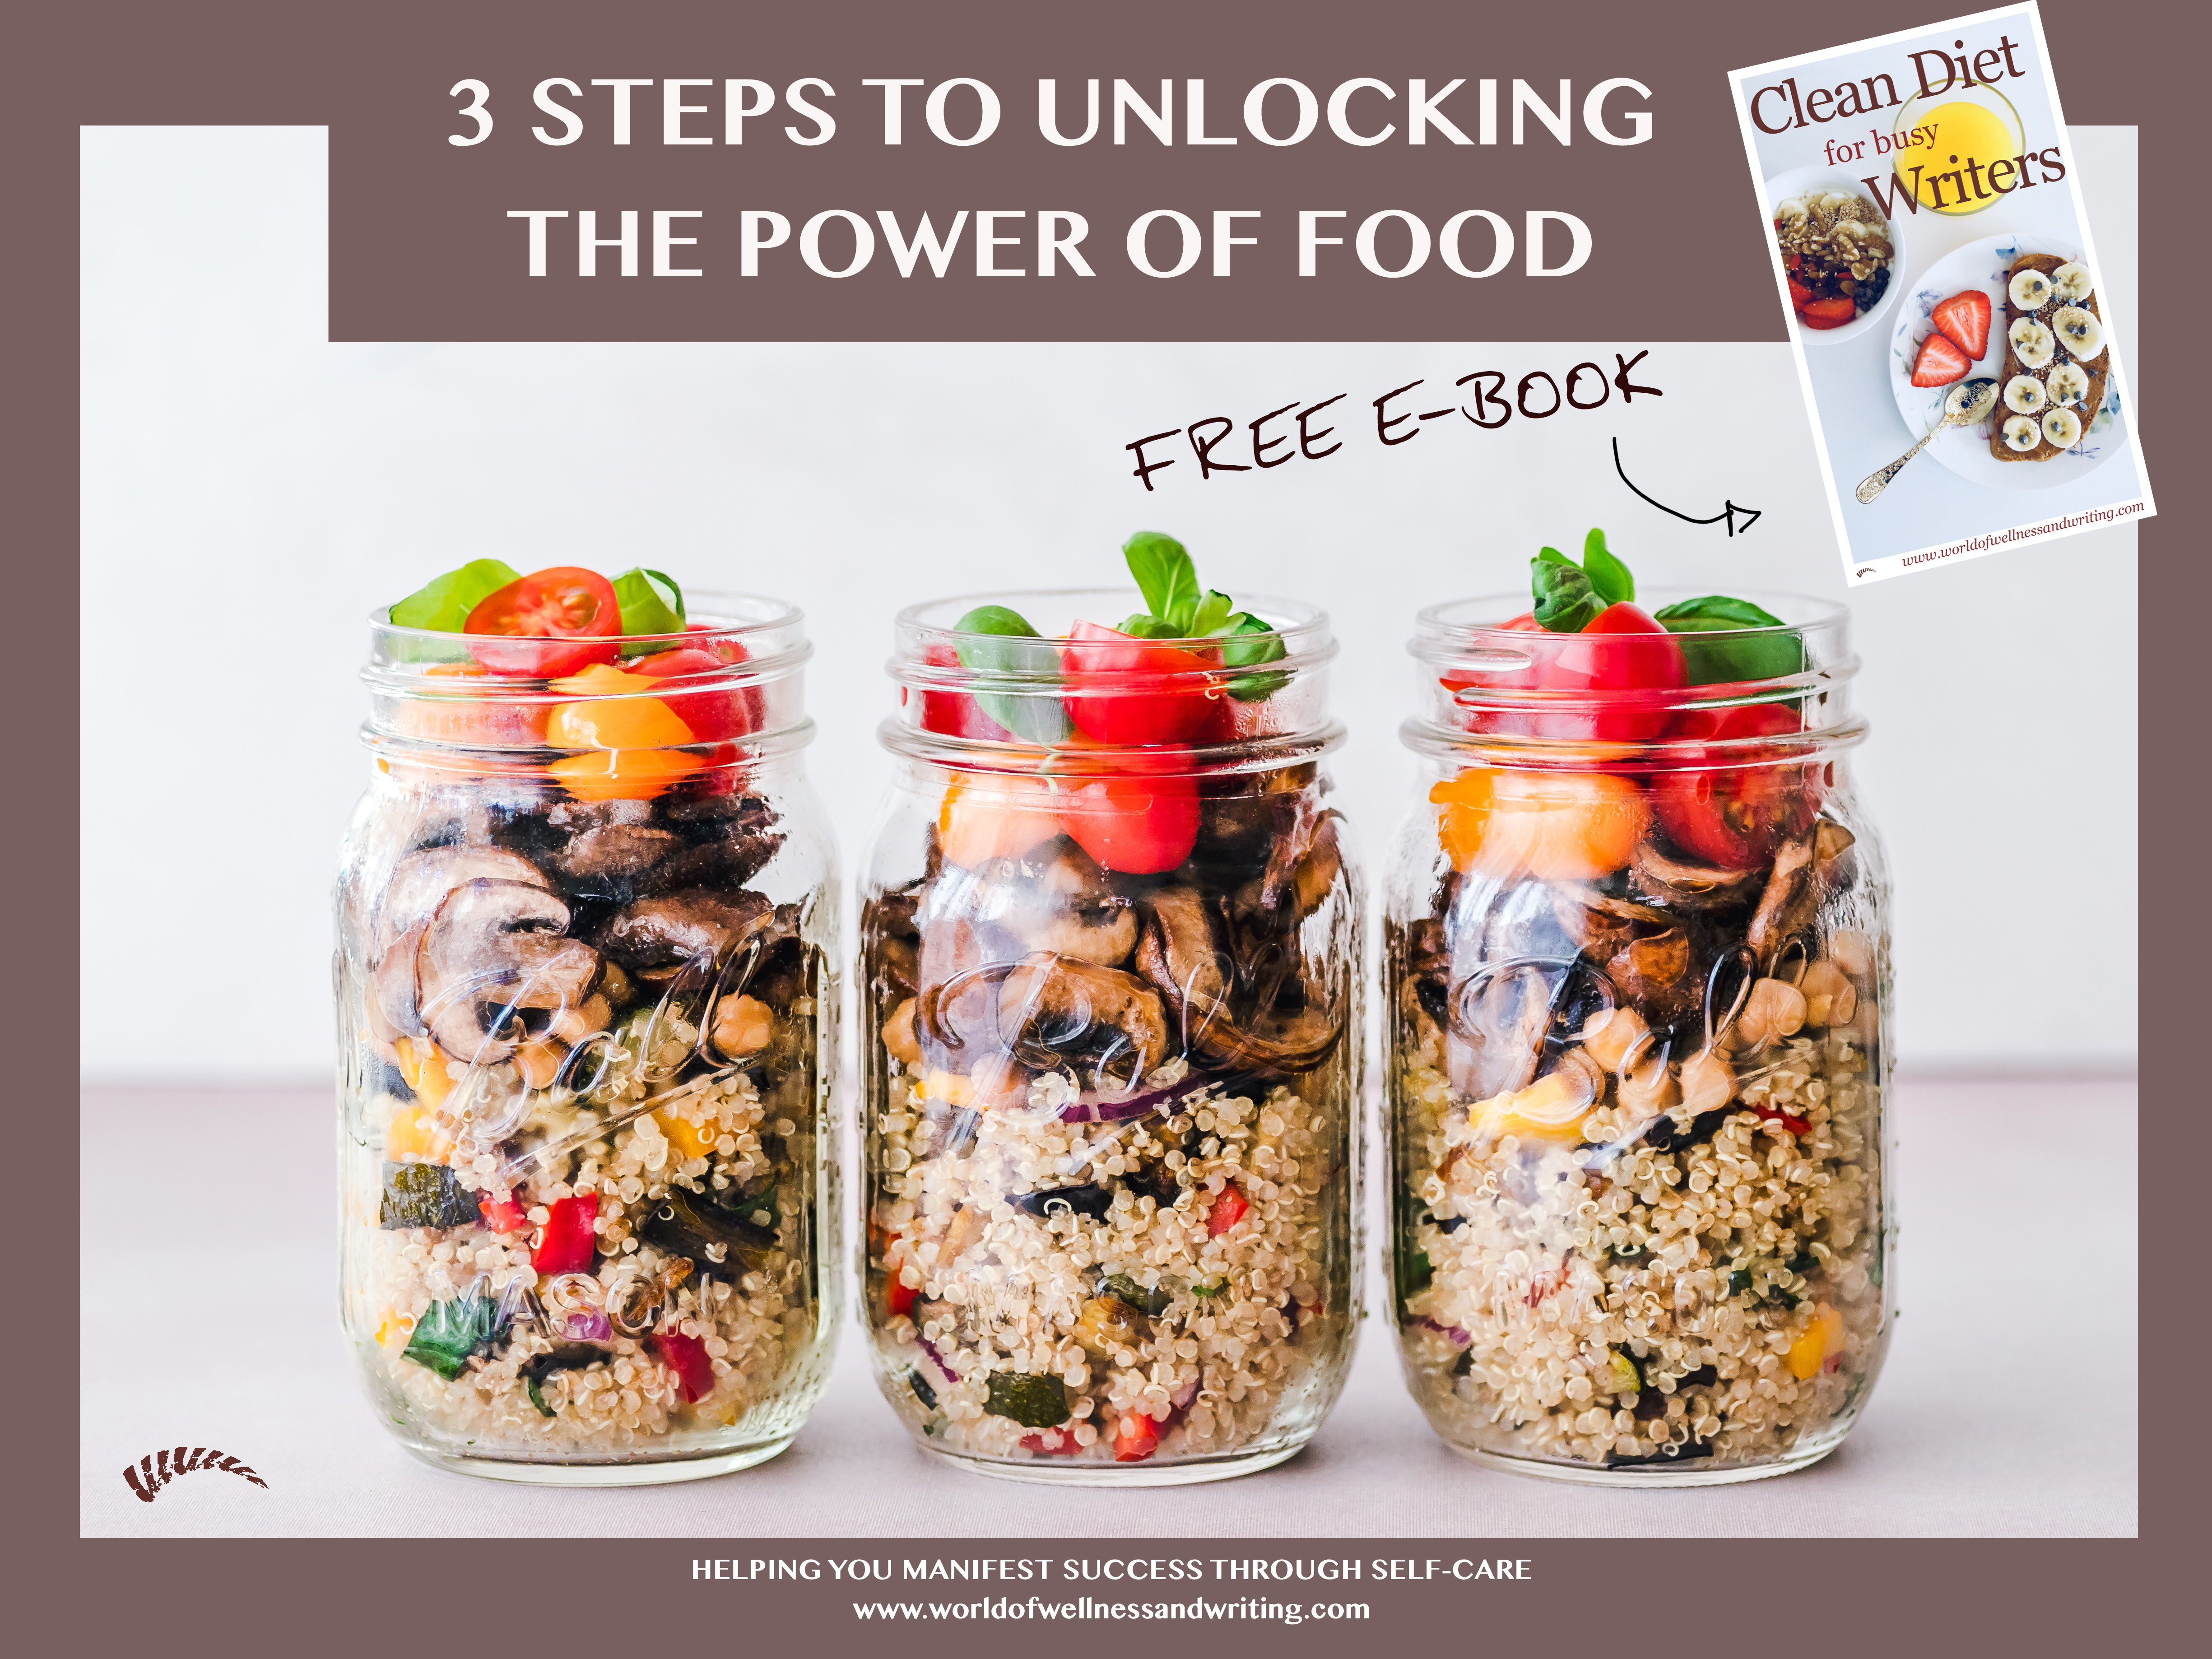 Free Clean Diet ebook on unlocking the power of food